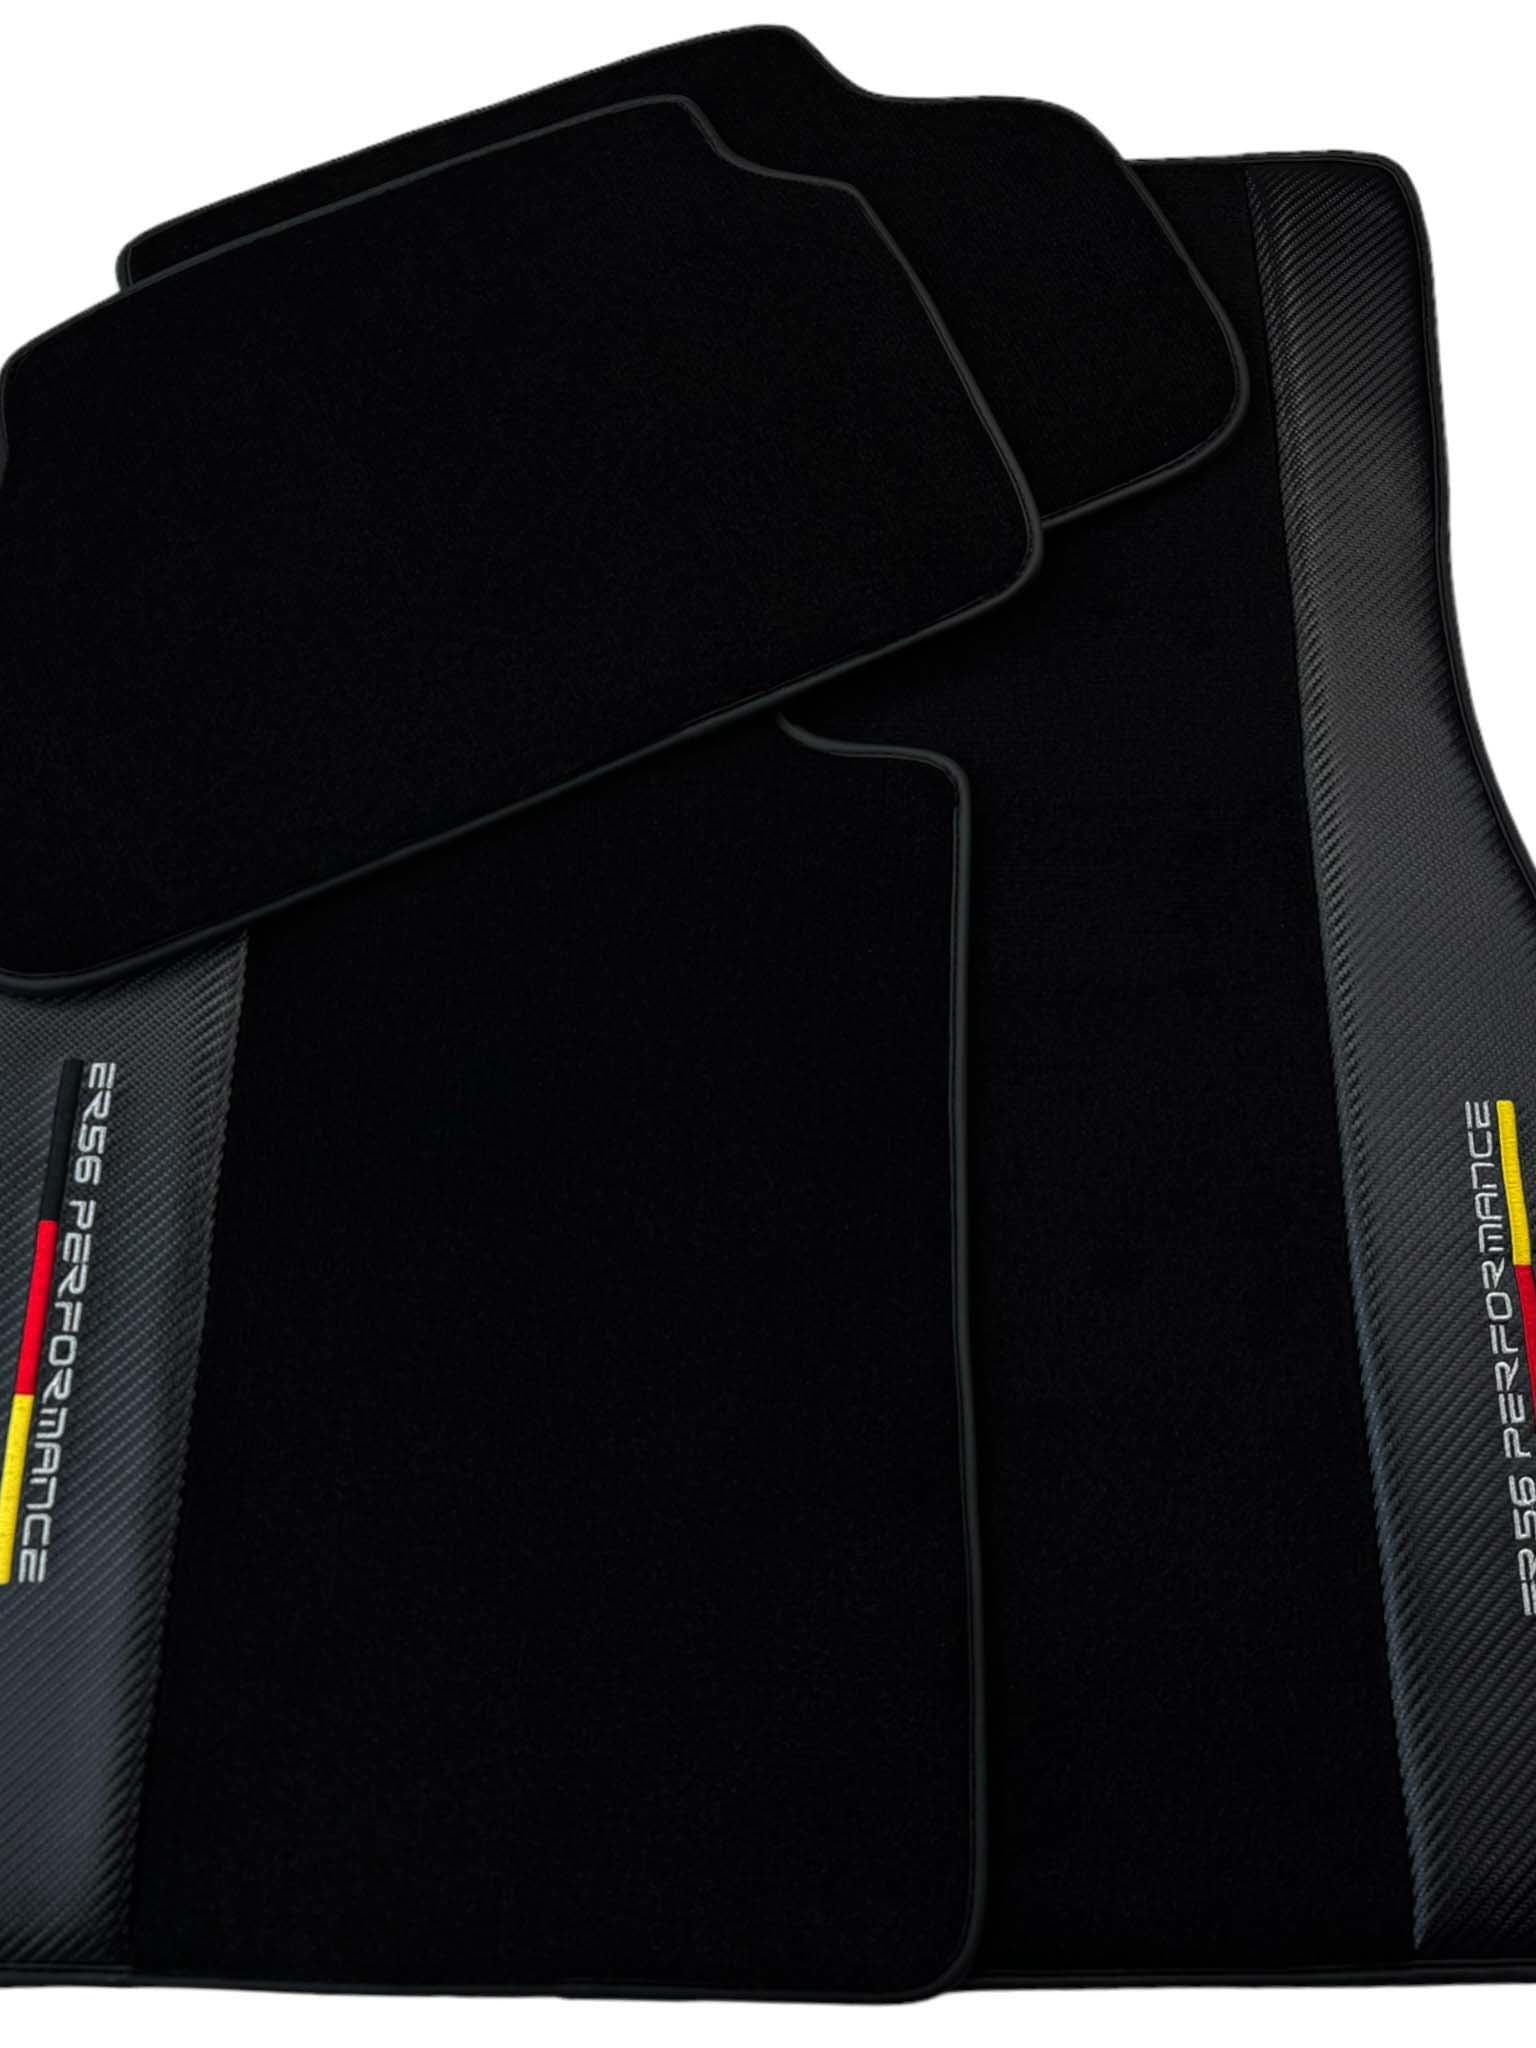 Black Floor Floor Mats For BMW 1 Series E87 | ER56 Performance | Carbon Edition